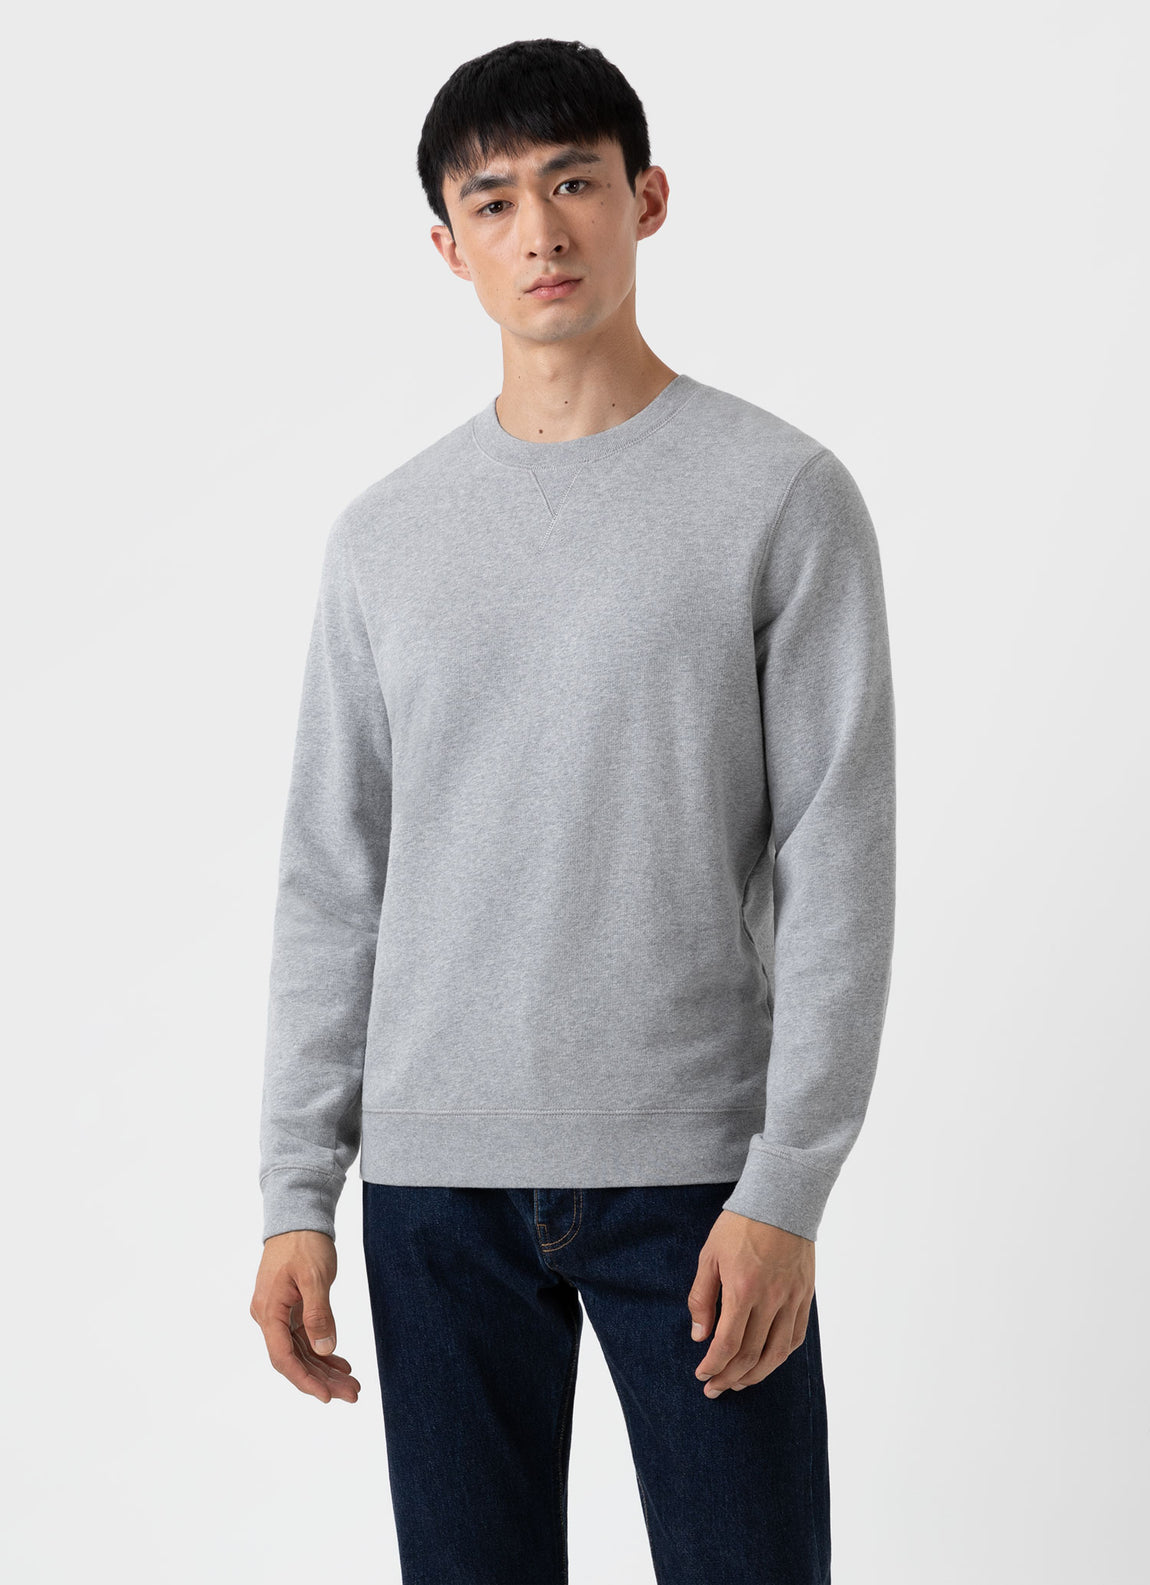 Men's Loopback Sweatshirt in Grey Melange | Sunspel